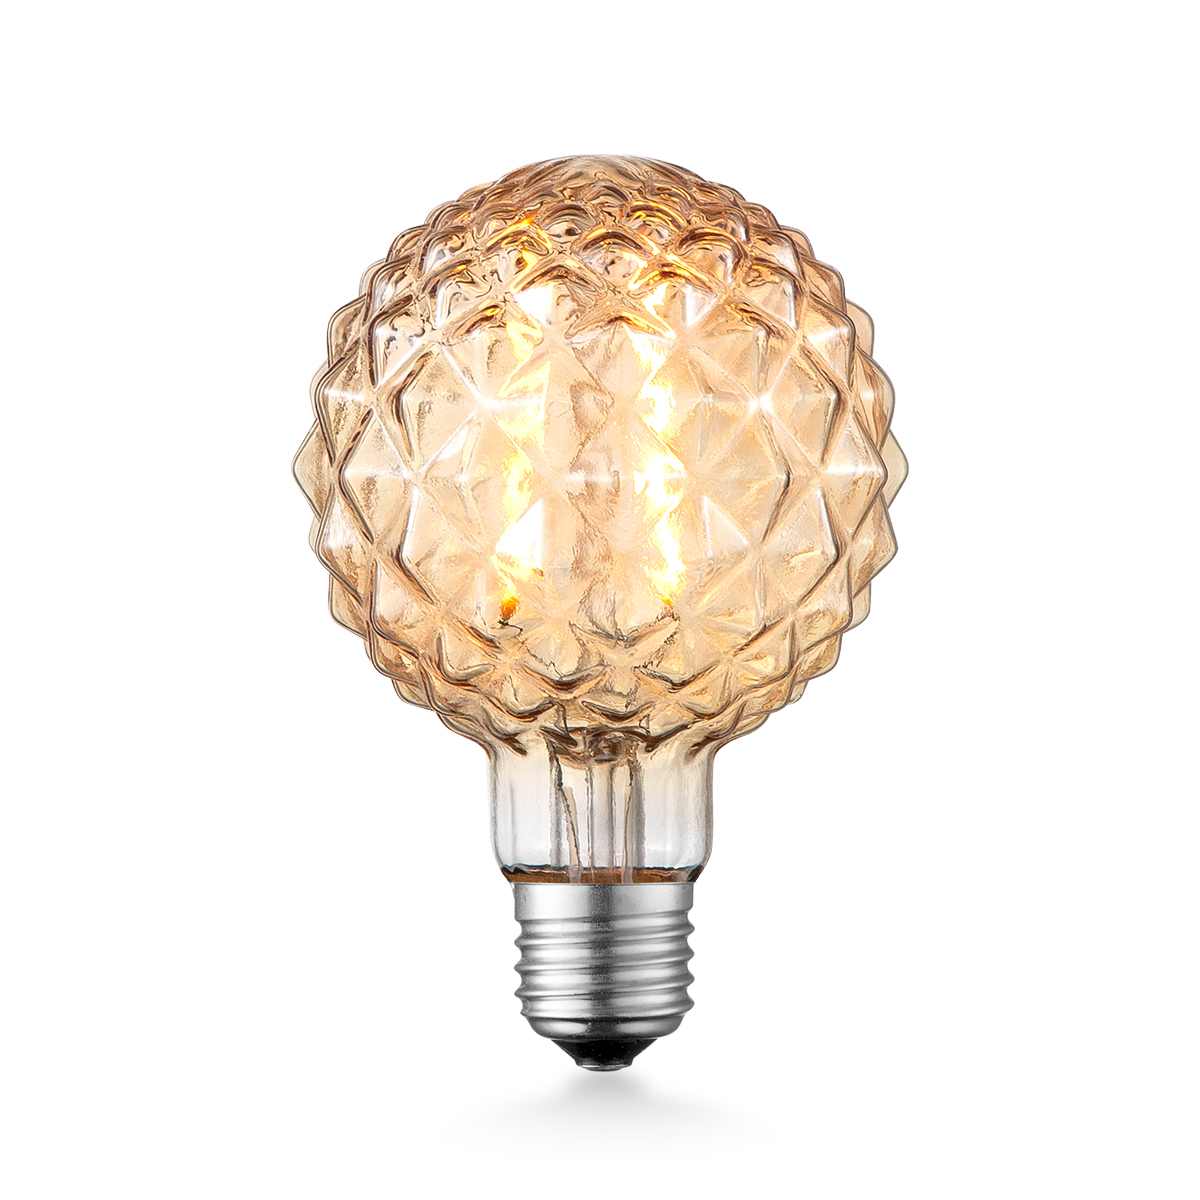 Tangla lighting - TLB-8072-02AM - LED Light Bulb Deco filament - G95 2W amber - non dimmable - grenade - E27